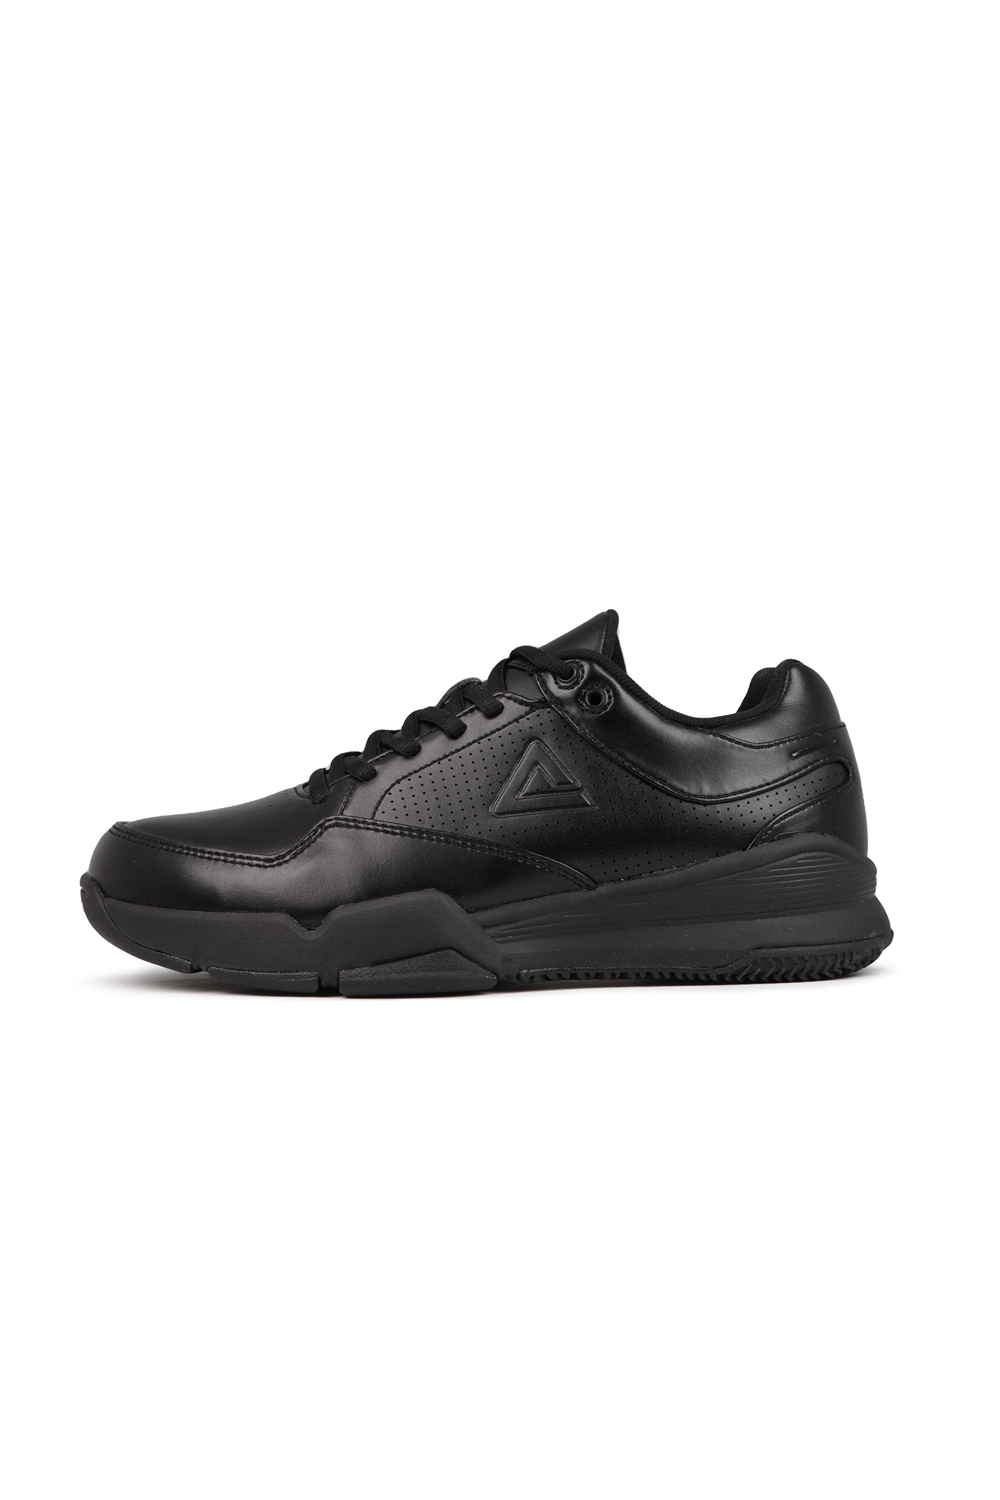 Peak FIBA Mens Basketball Referee Shoes - Black